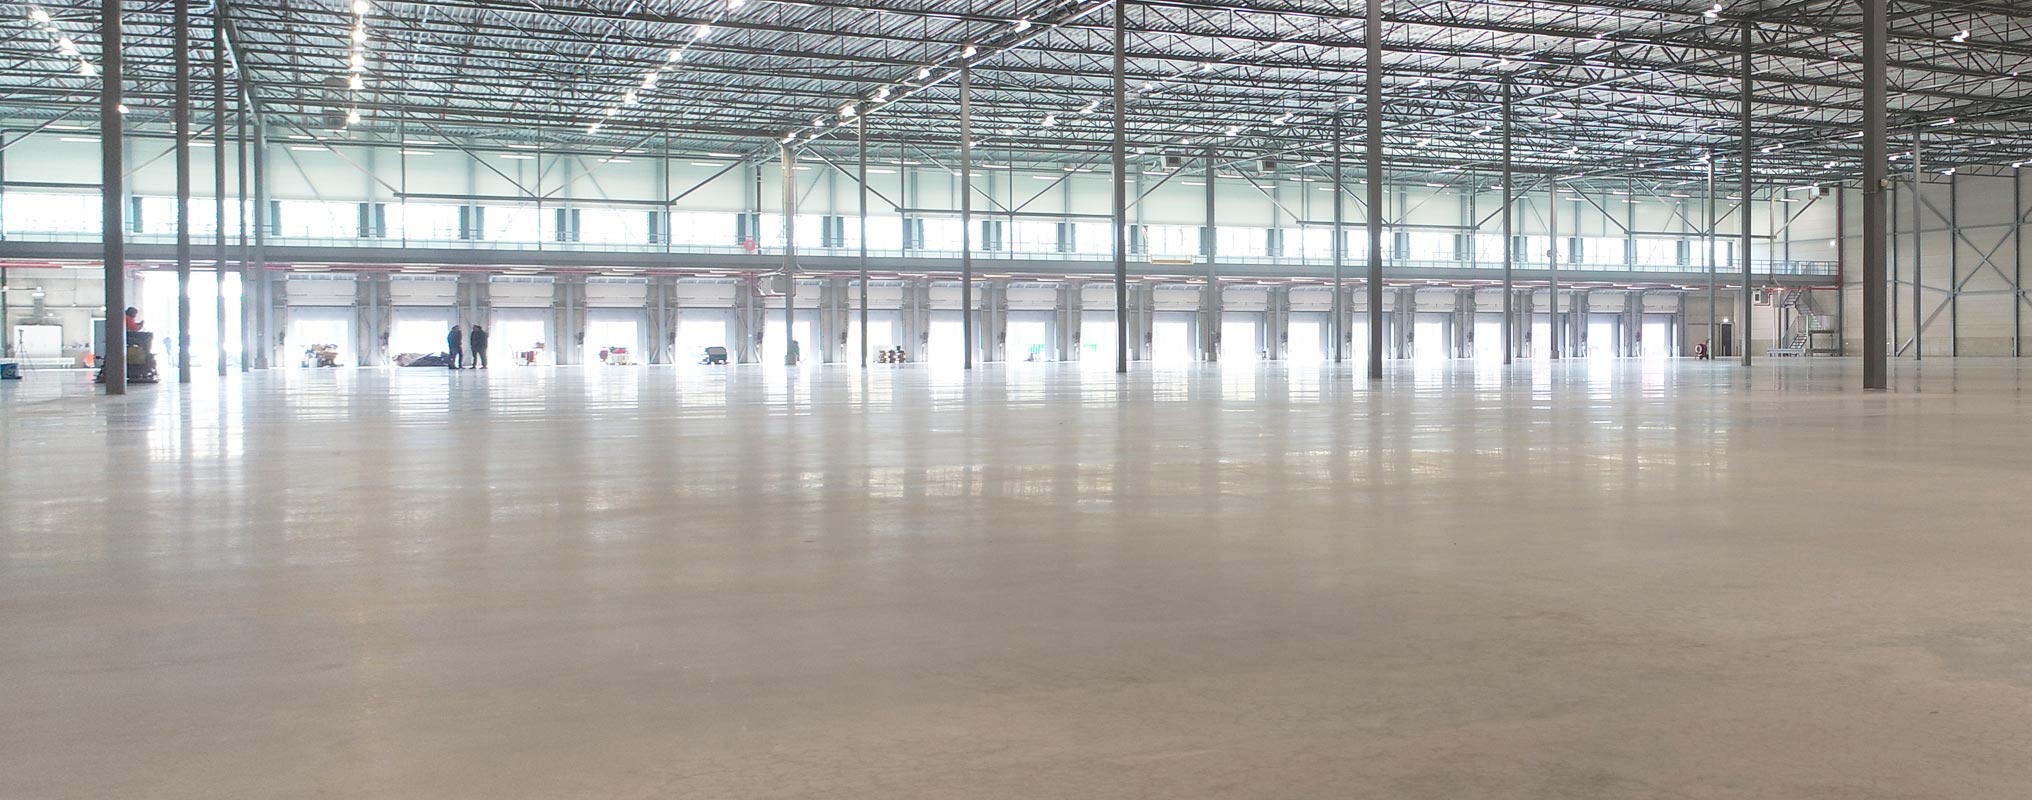 Polished industrial concrete floor